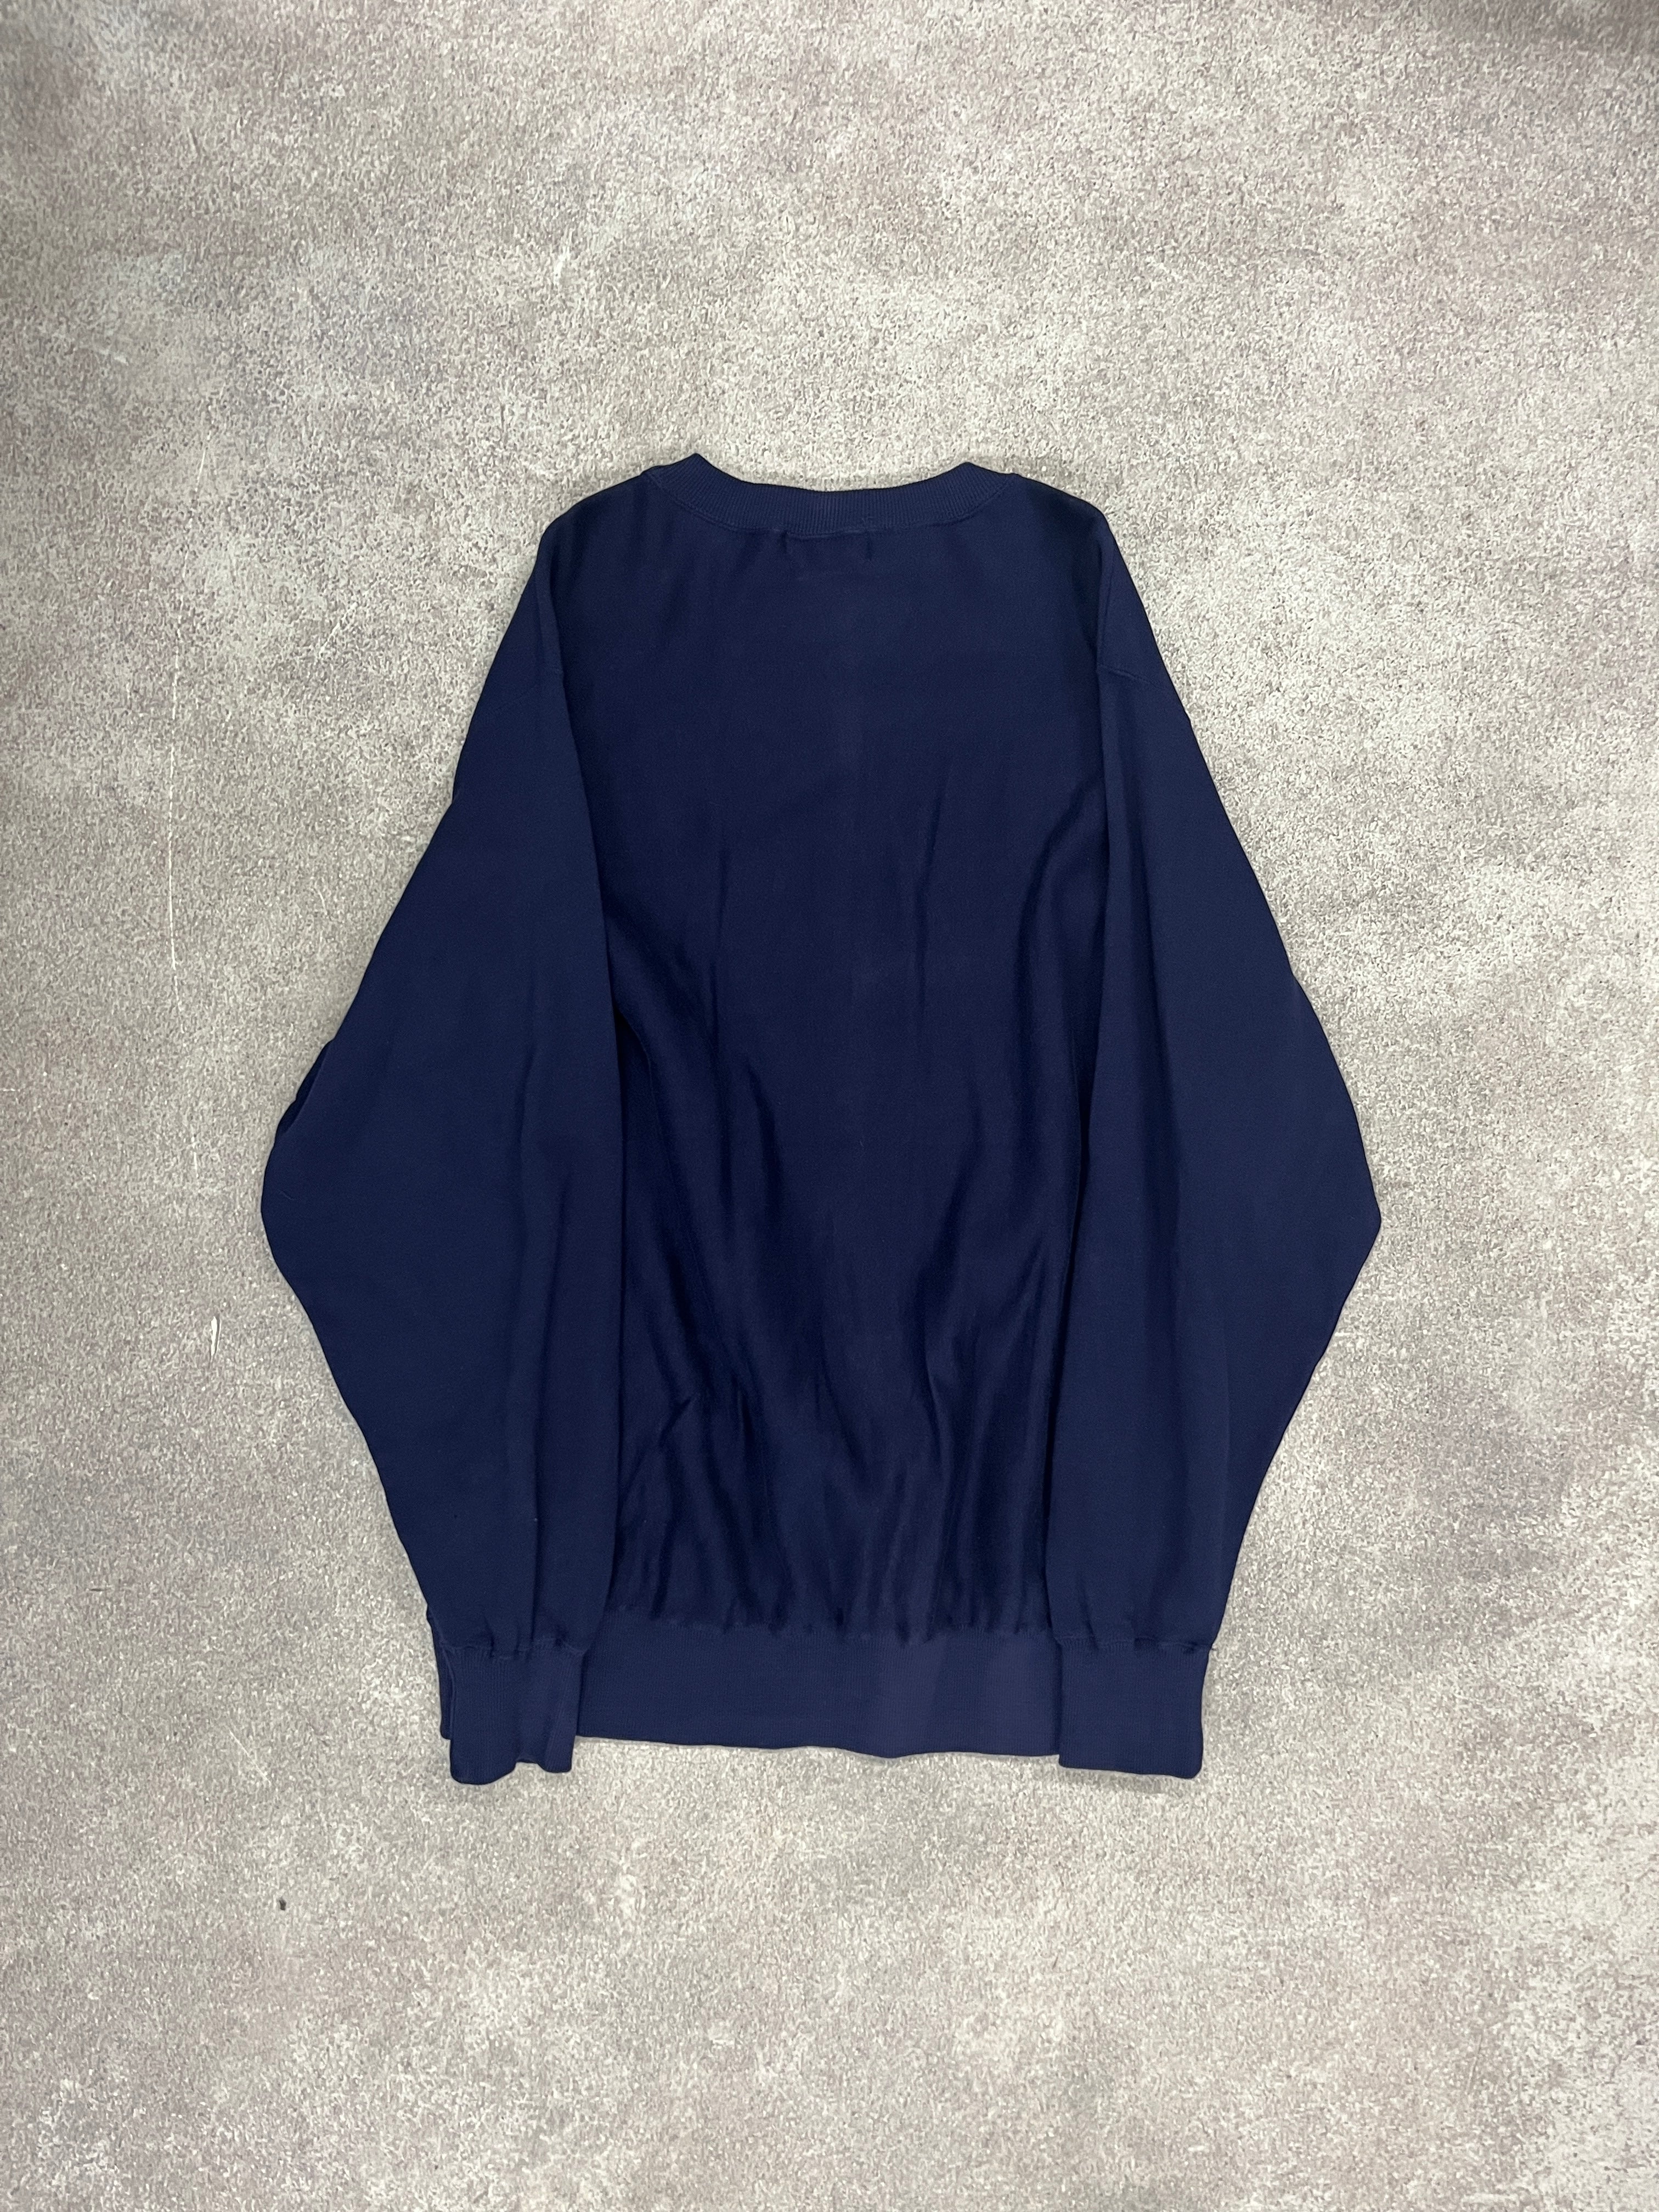 Vintage Blank Sweater Blue // 2X-Large - RHAGHOUSE VINTAGE